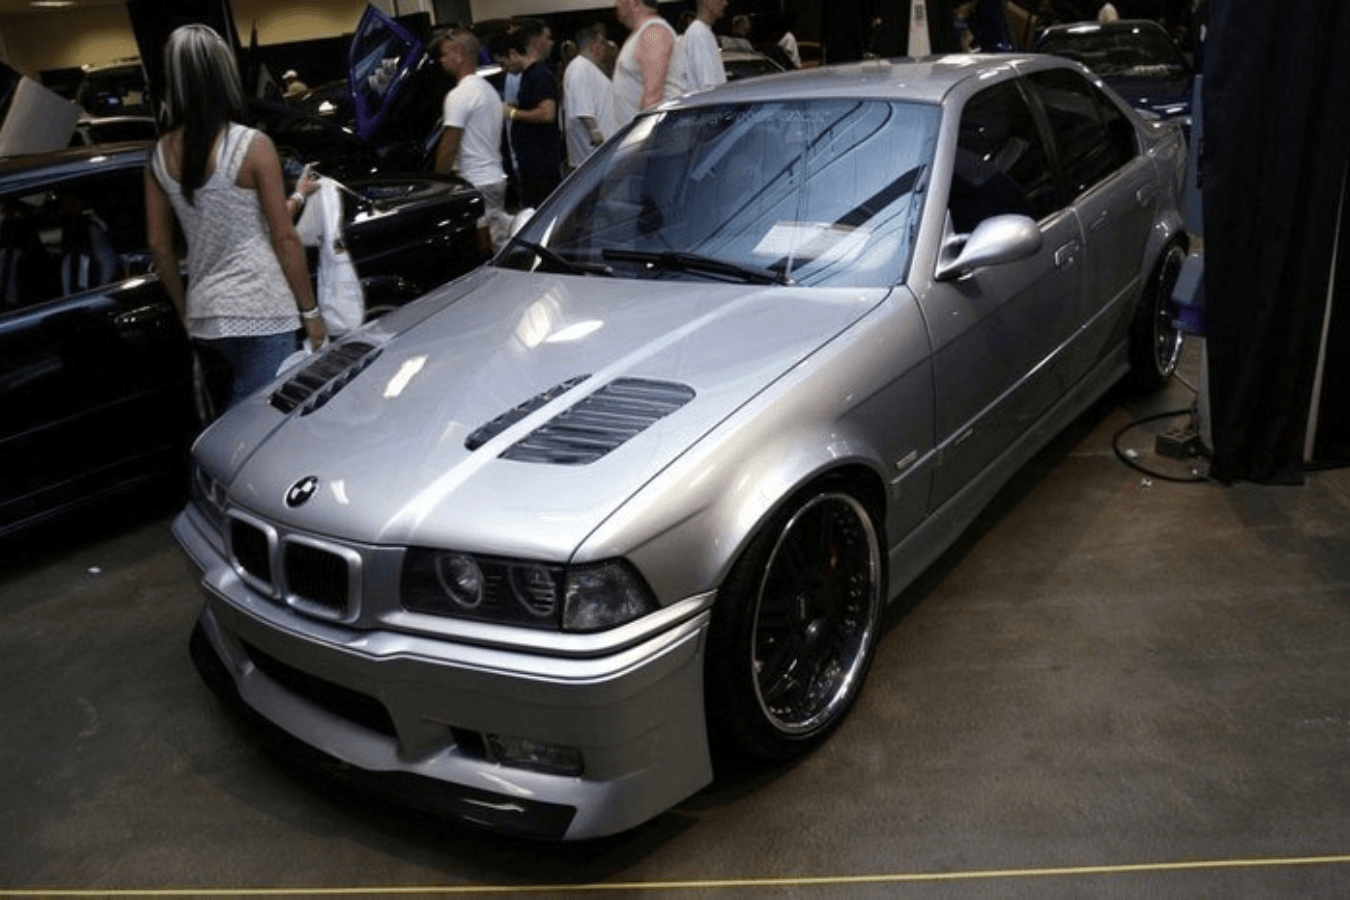 BMW E36 Series 3 GTR Inspired Front Hood Gills (1990 - 1999) - K2 Industries